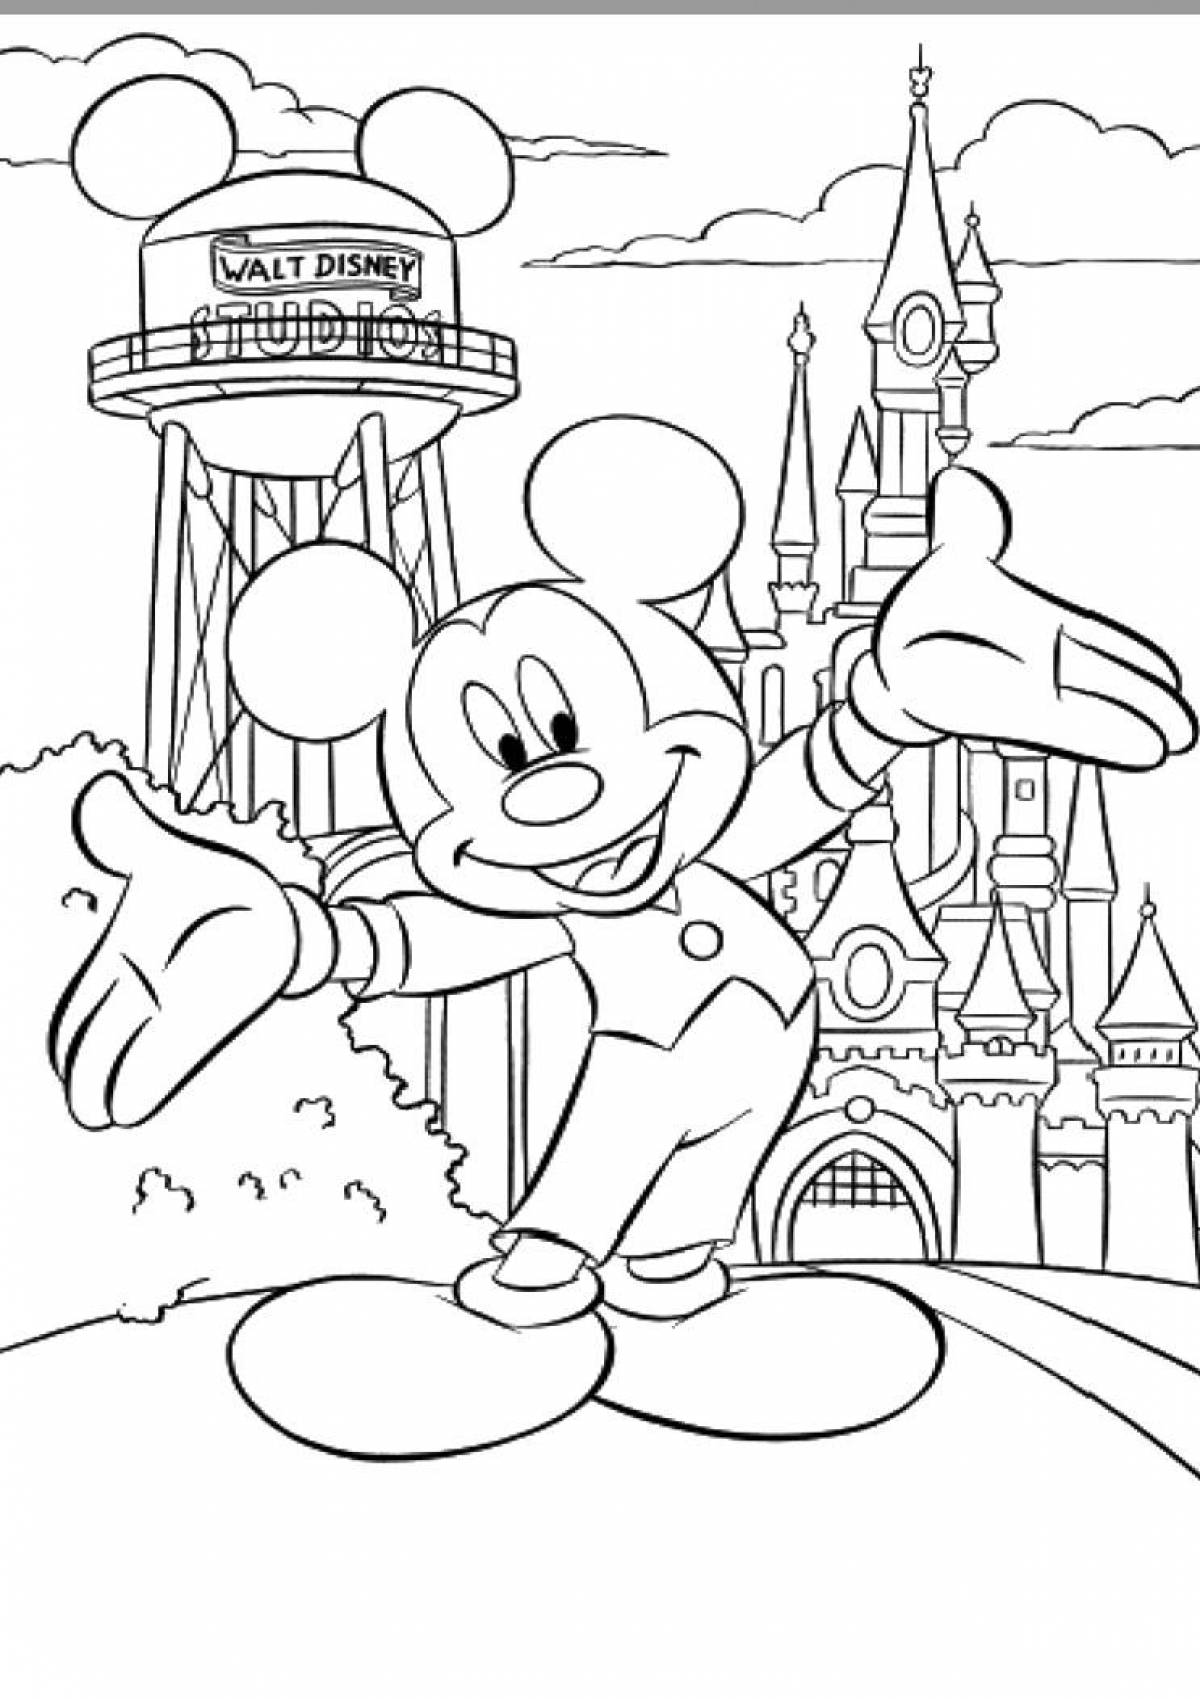 Mickey and Disneyland